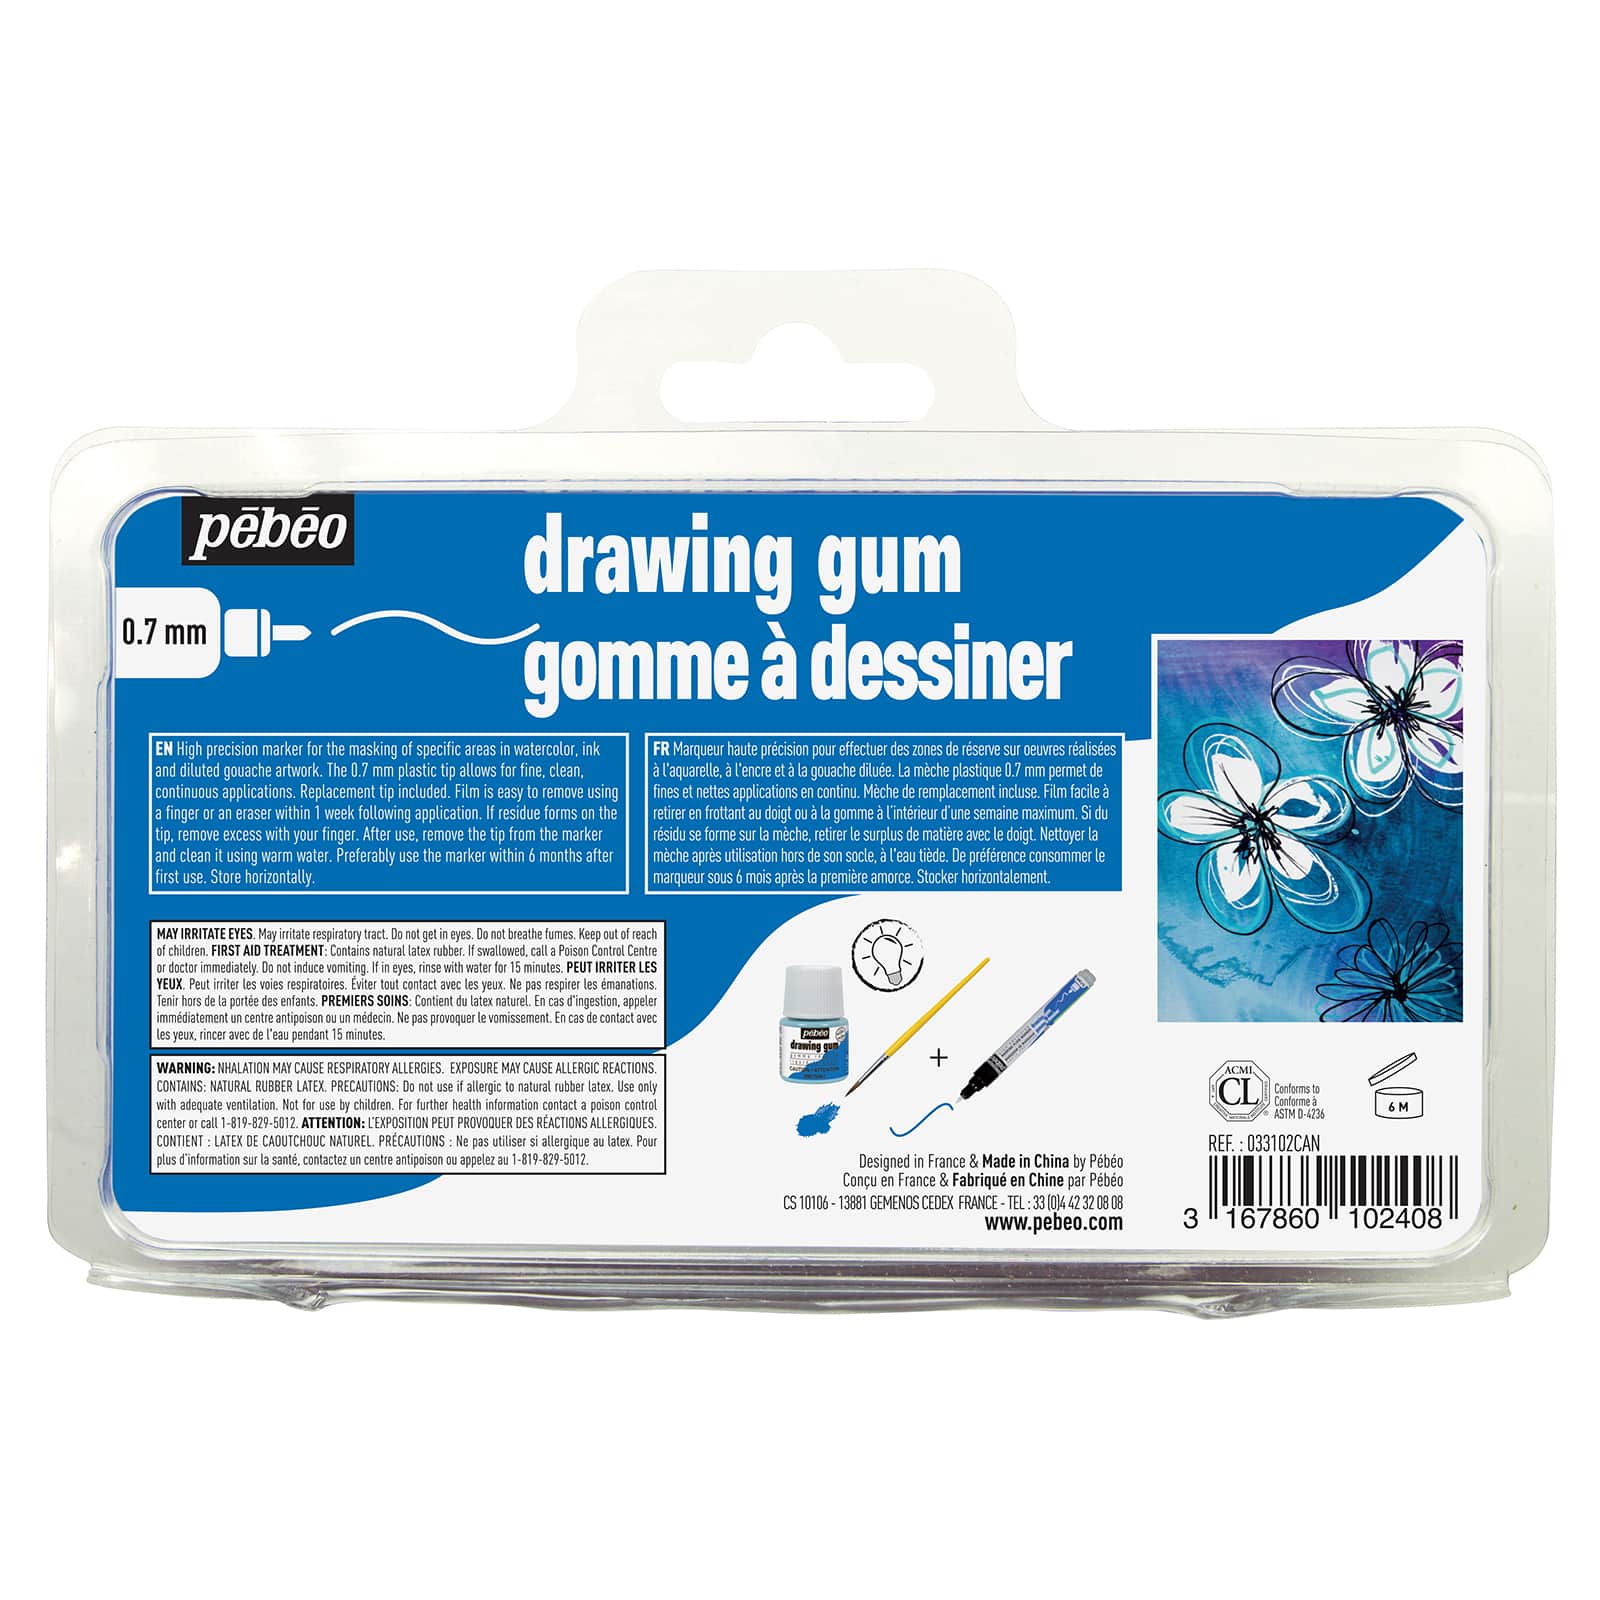 Pebeo Drawing Gum Pen - 0.7mm Nib - Includes Nib Replacement - Single Pen